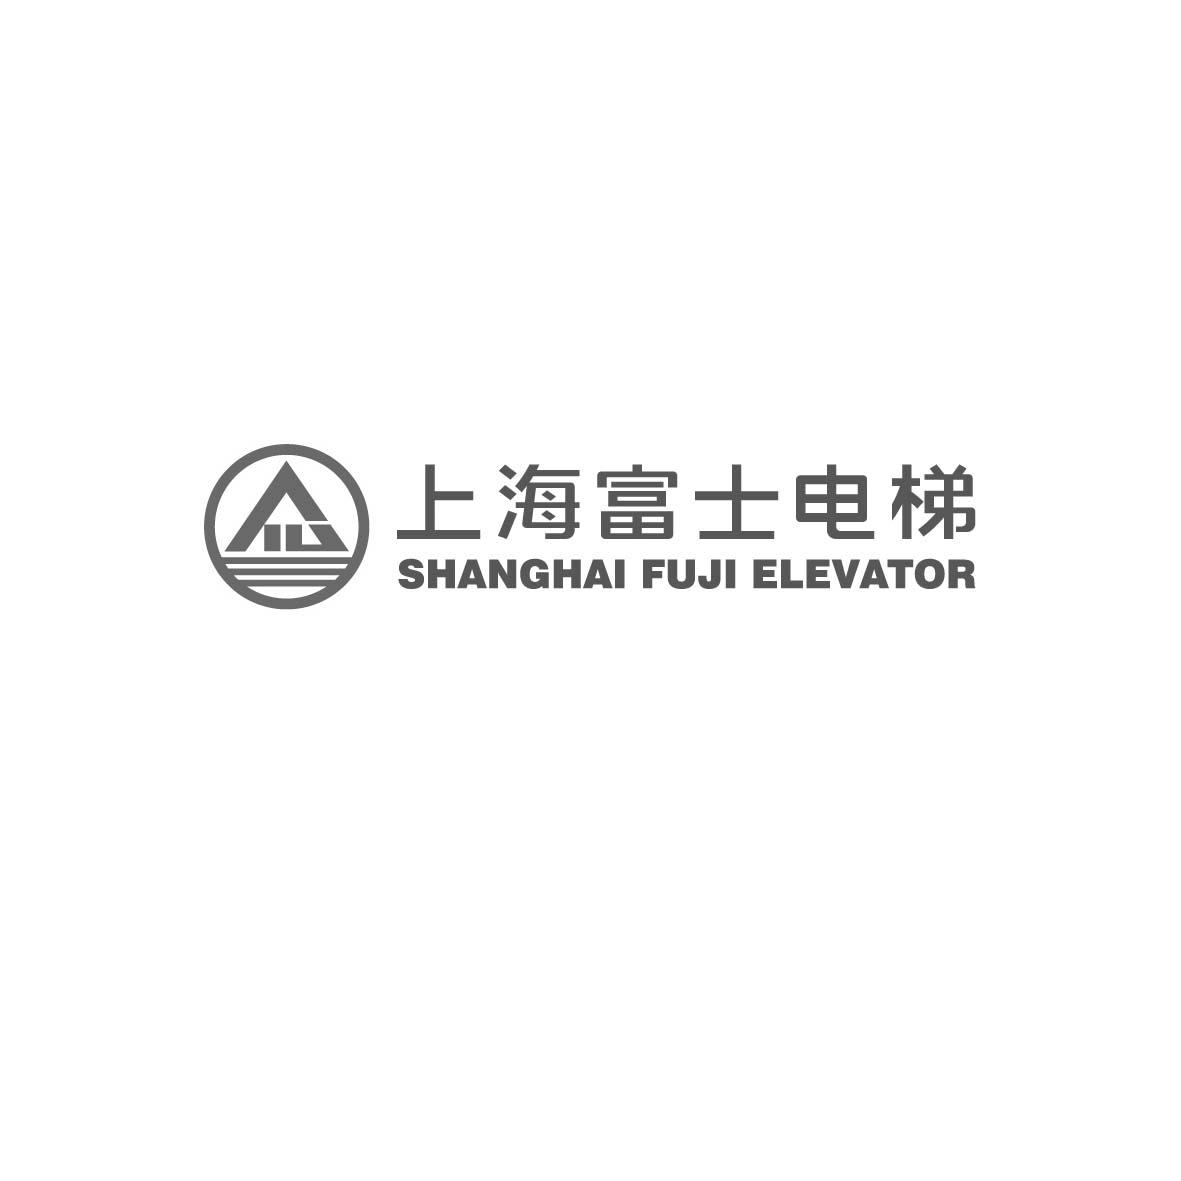 上海富士电梯shanghaifujielevator商标公告